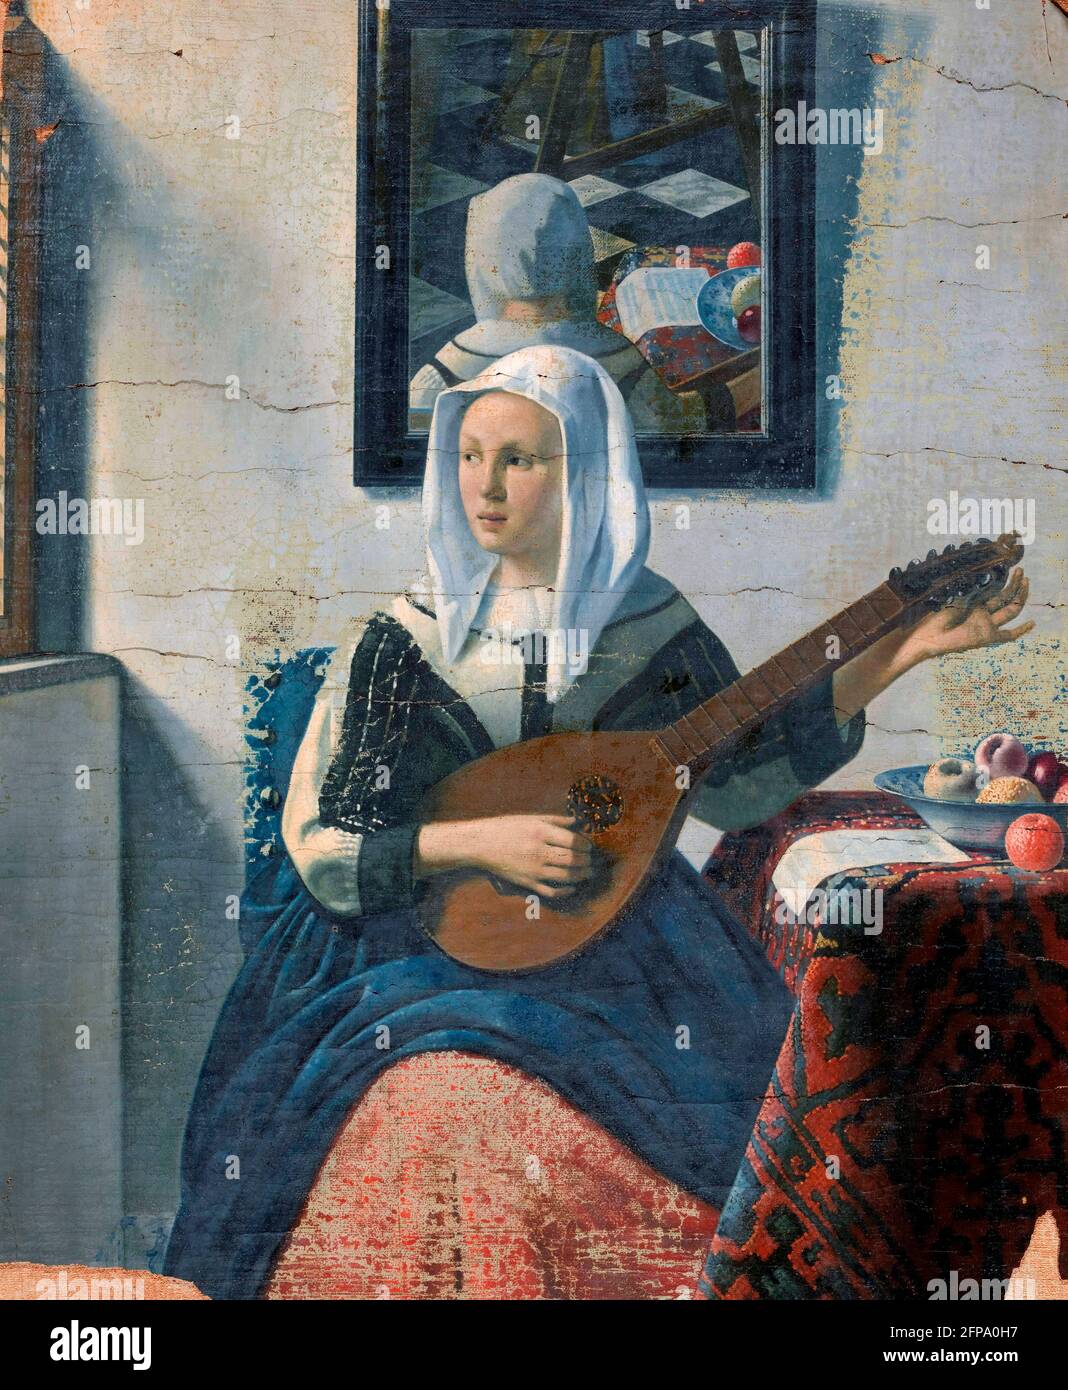 Han van Meegeren.  Cisterspelende Vrouw (Woman Playing a Cittern), a painting in the style of Vermeer by the famous Dutch art forger, Henricus Antonius 'Han' van Meegeren (1889-1947), oil on canvas, 1930-1940 Stock Photo